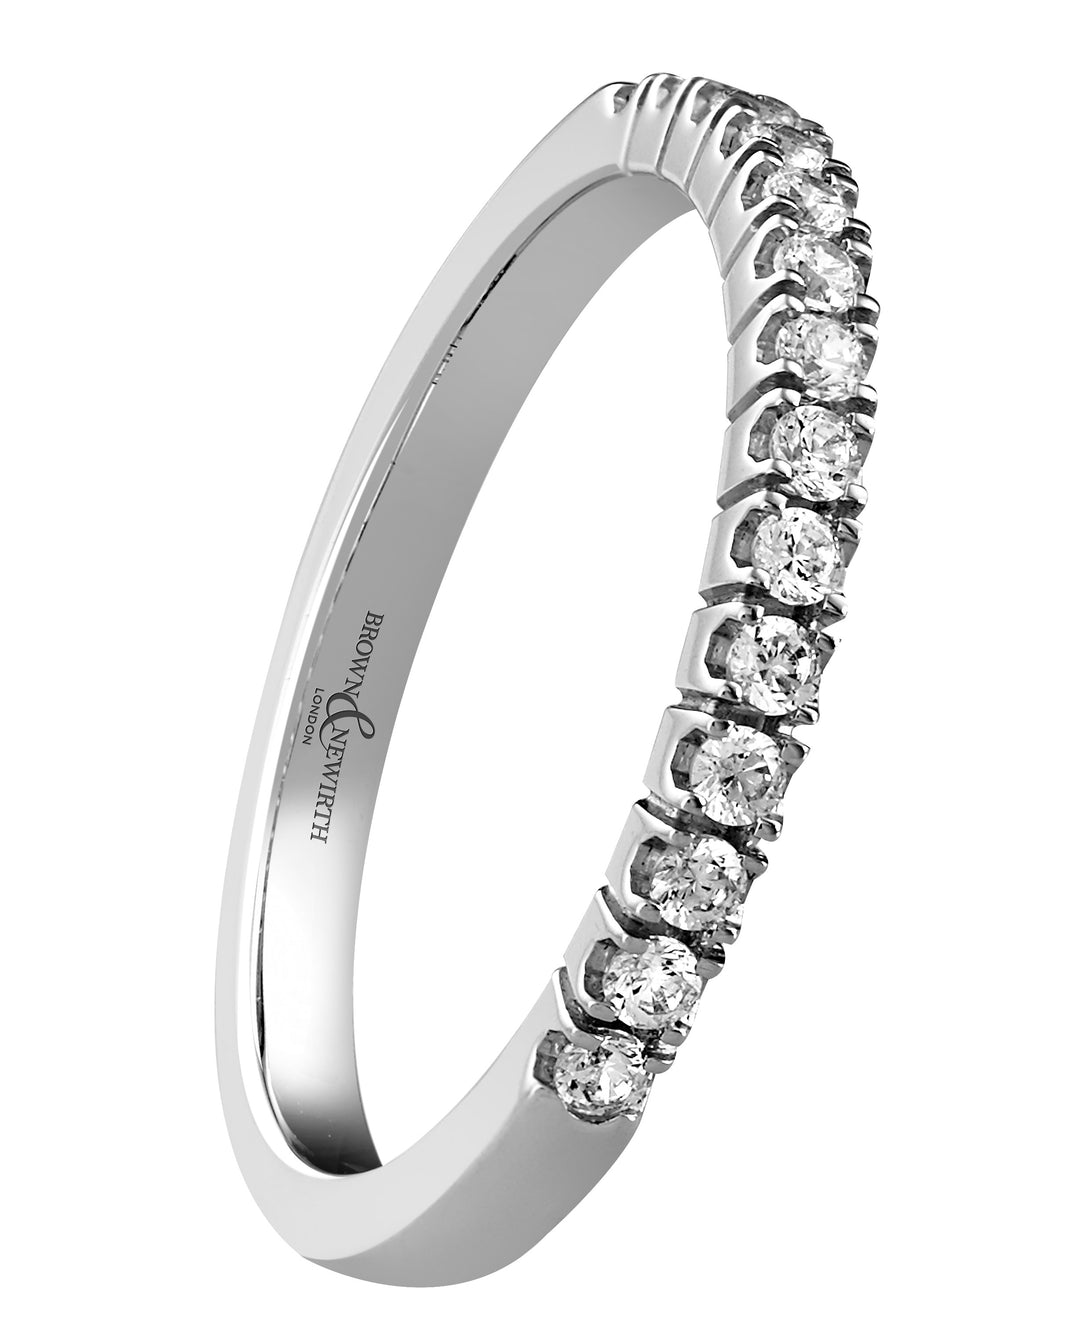 B&N Exquisite Half Eternity Ring